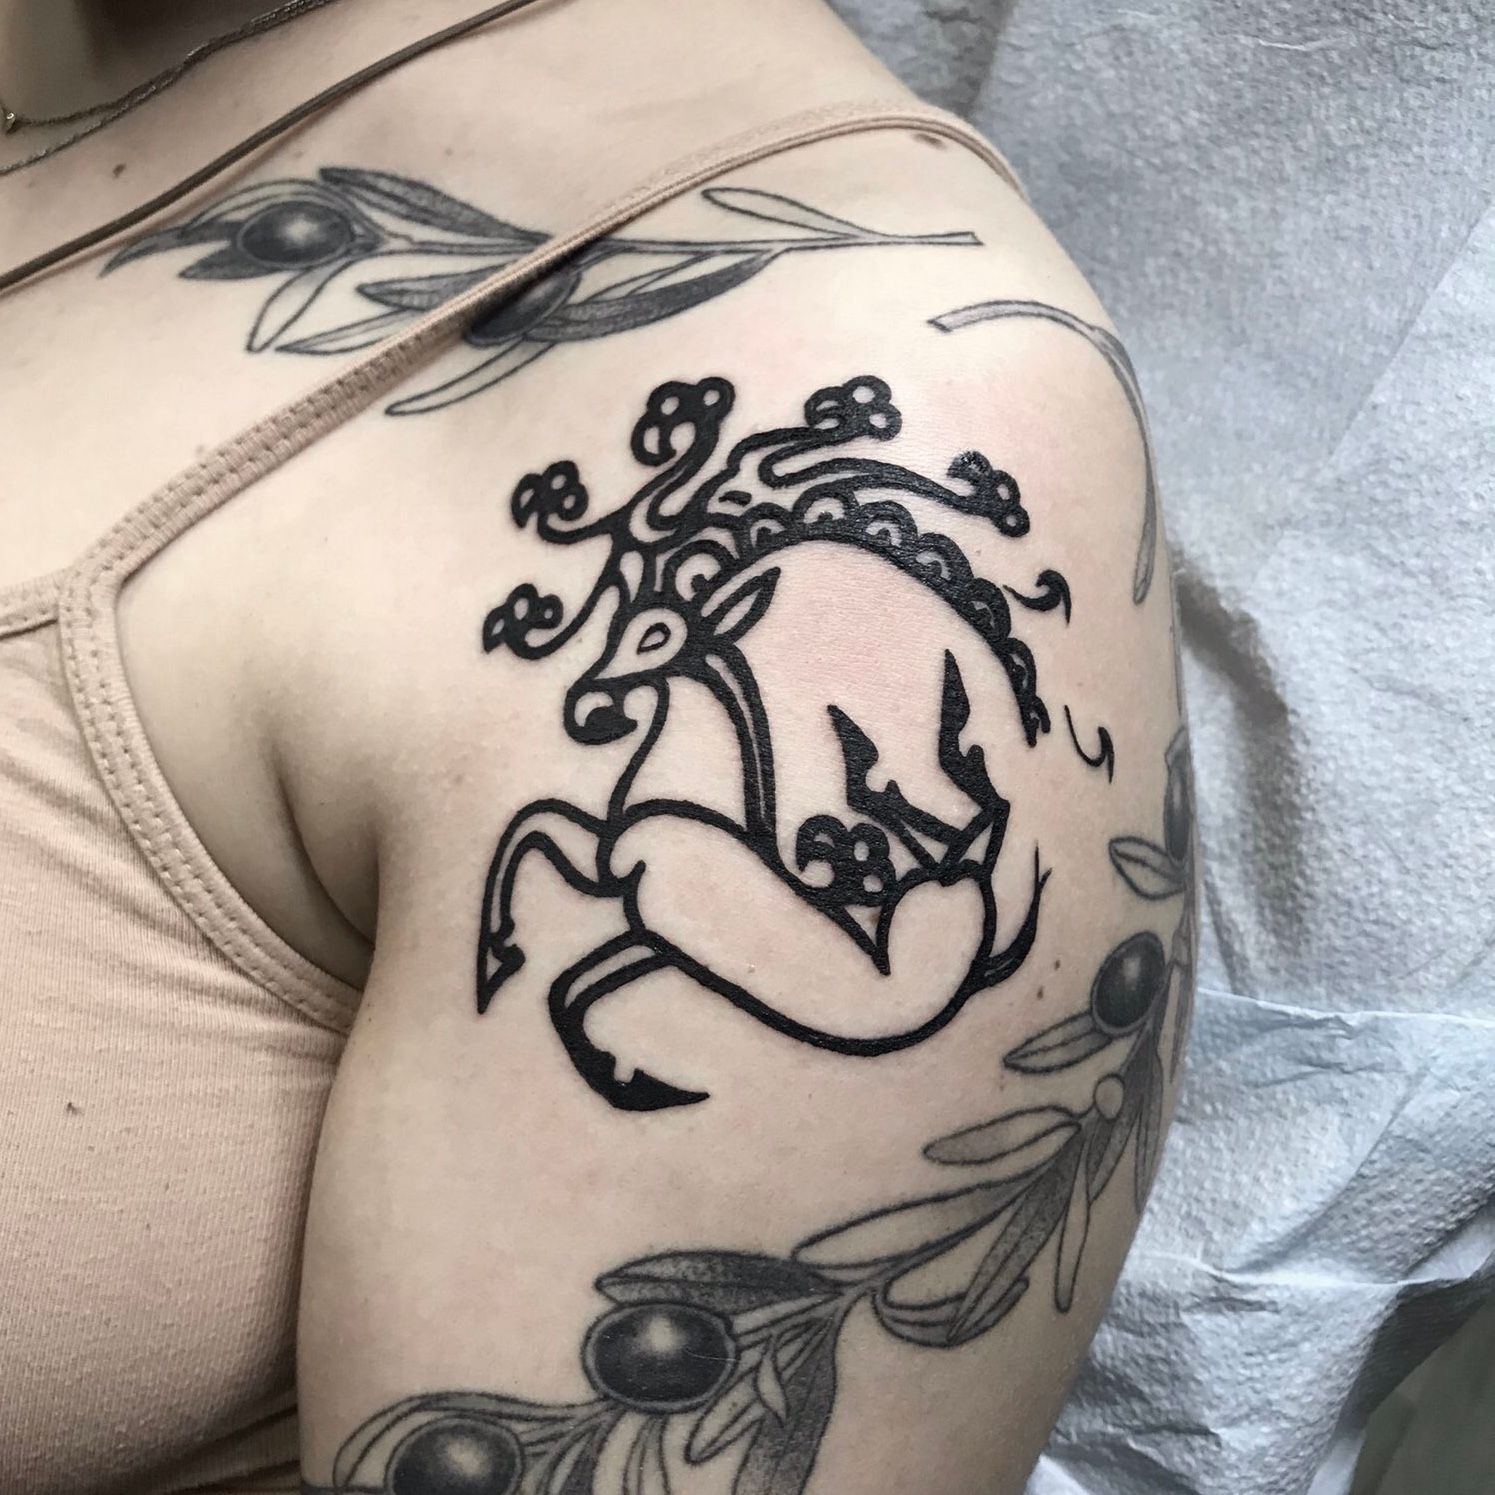 Update 131+ princess symbol tattoos